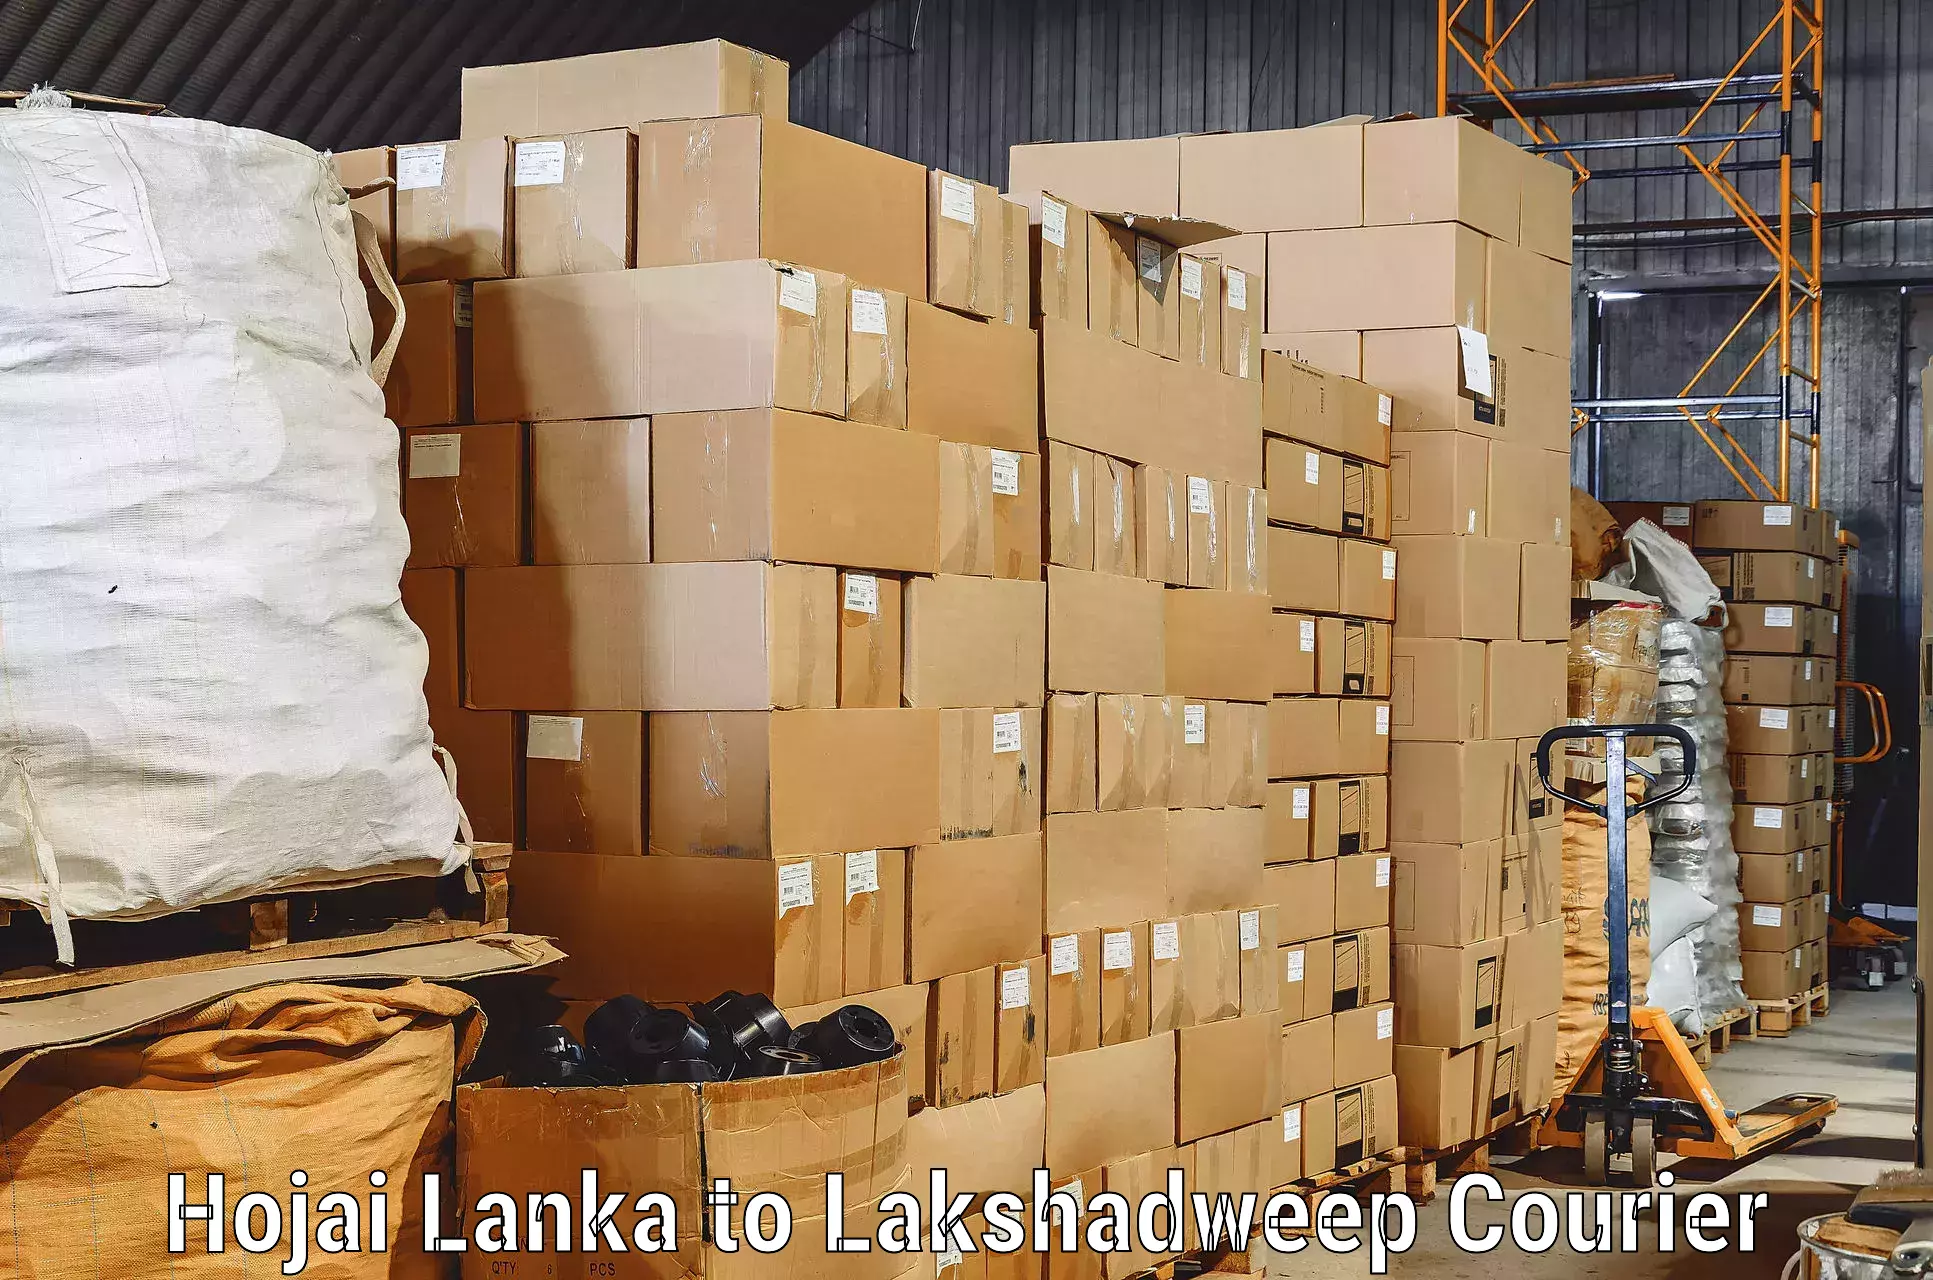 Professional furniture movers Hojai Lanka to Lakshadweep